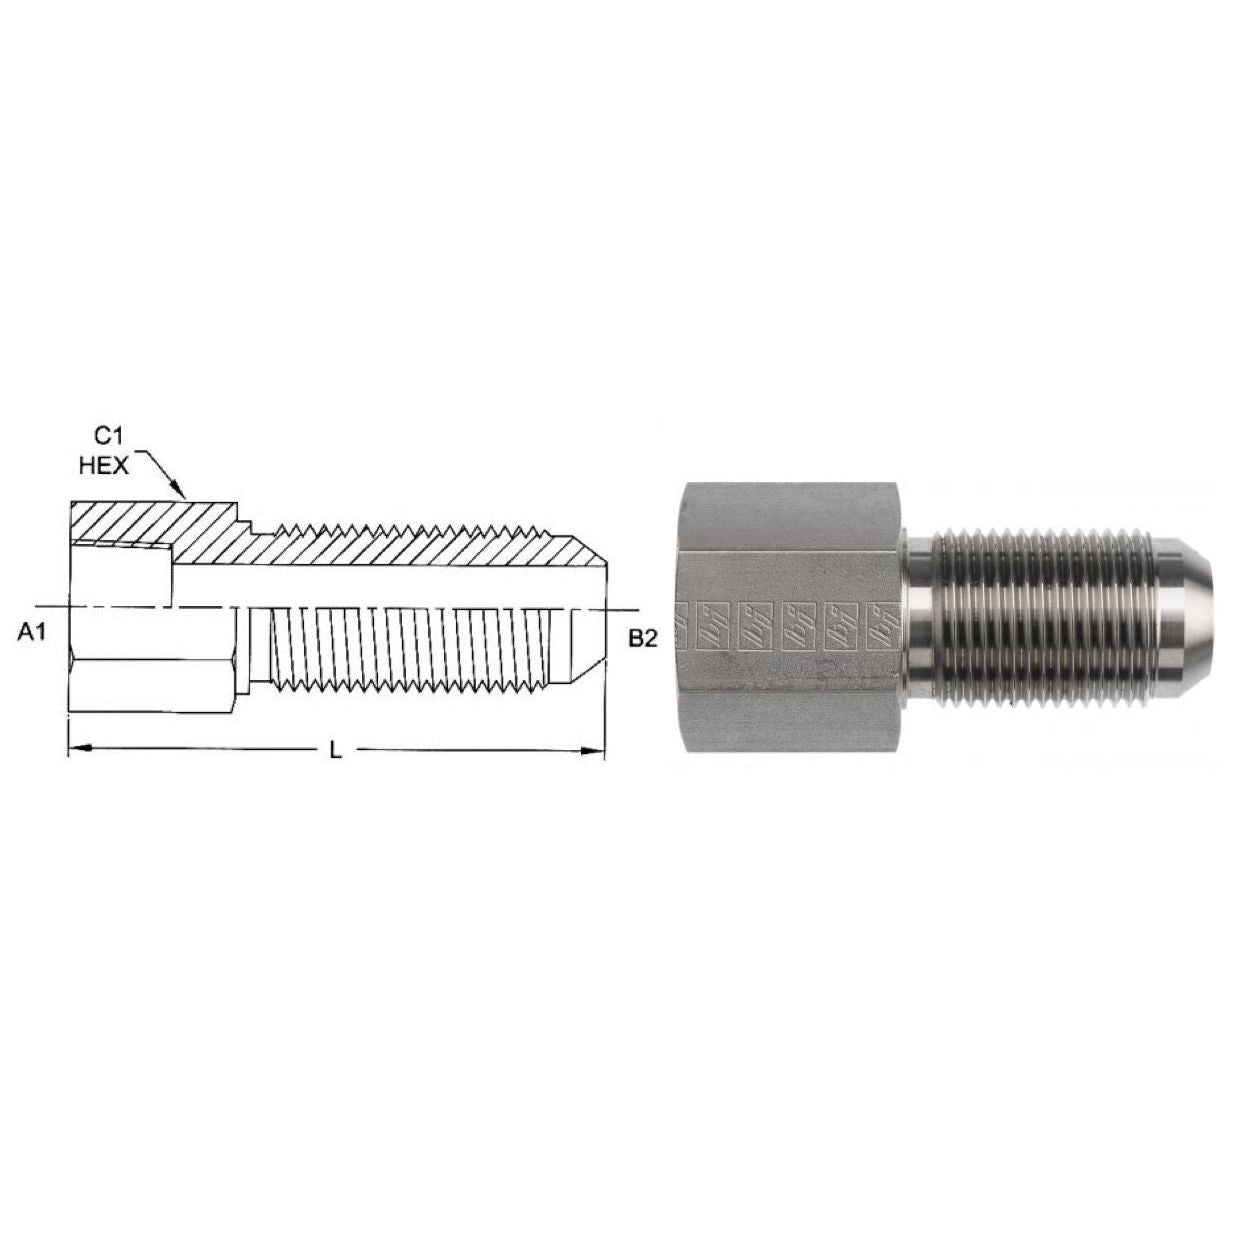 2705-24-24 : OneHydraulics Bulkhead Adapter, Straight, 1.5 (1-1/2") JIC JIC x 1.5 (1-1/2") Male, Steel, 2000psi